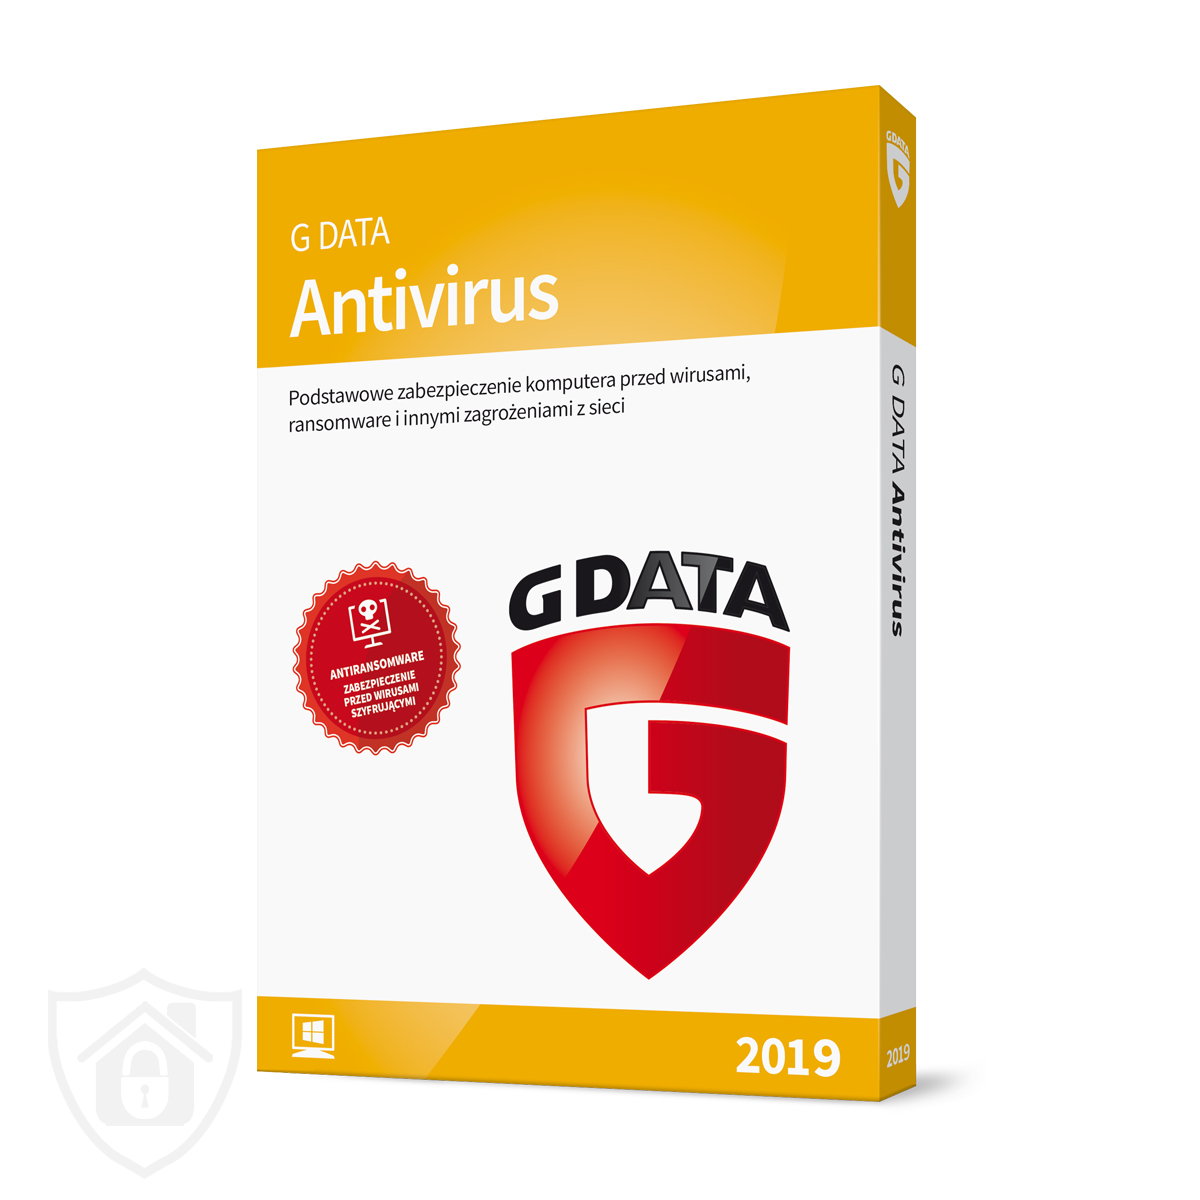 G DATA Antywirus 2019